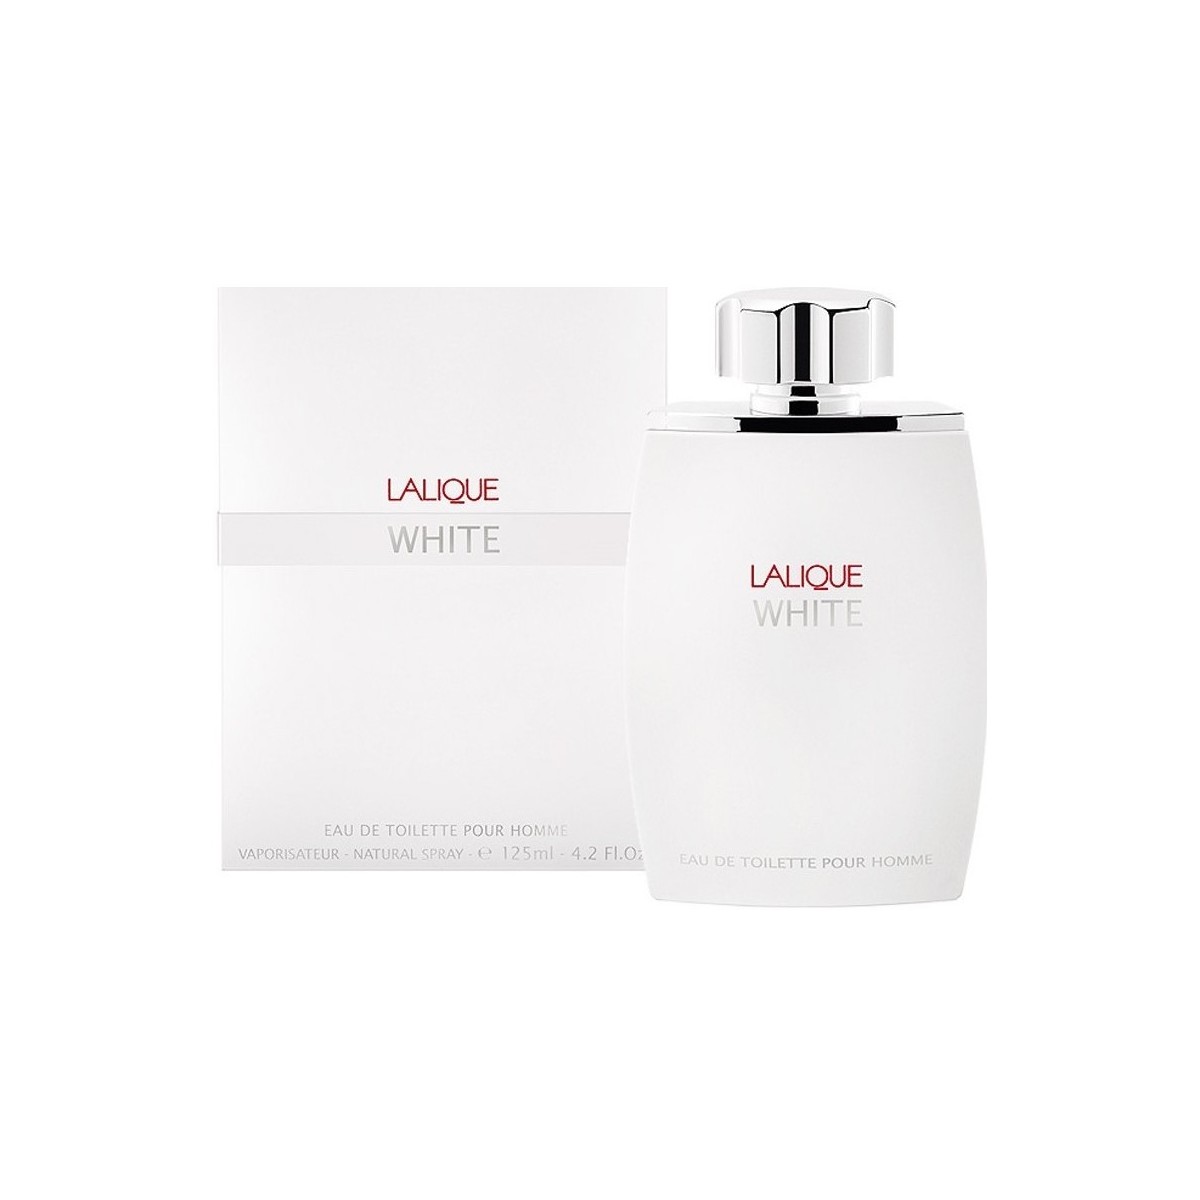 Belleza Hombre Colonia Lalique White - Eau de Toilette - 125ml - Vaporizador White - cologne - 125ml - spray